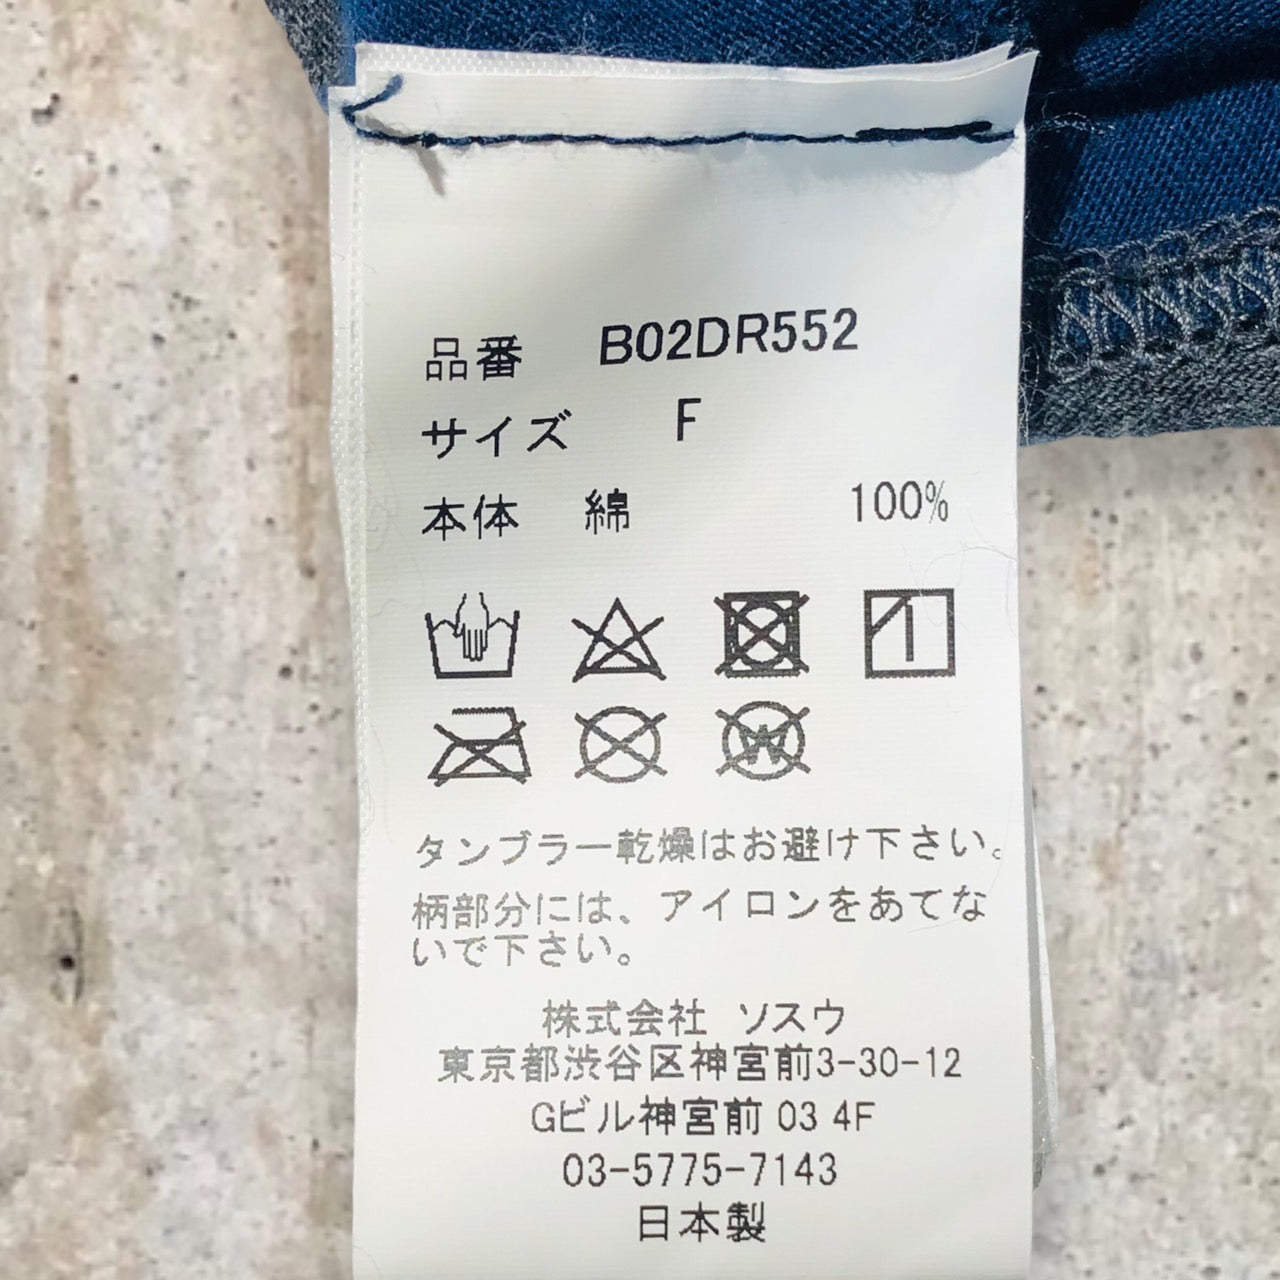 Maison MIHARA YASUHIRO(メゾンミハラヤスヒロ) Tシャツドッキングワンピース B02DR522 FREE ミックス